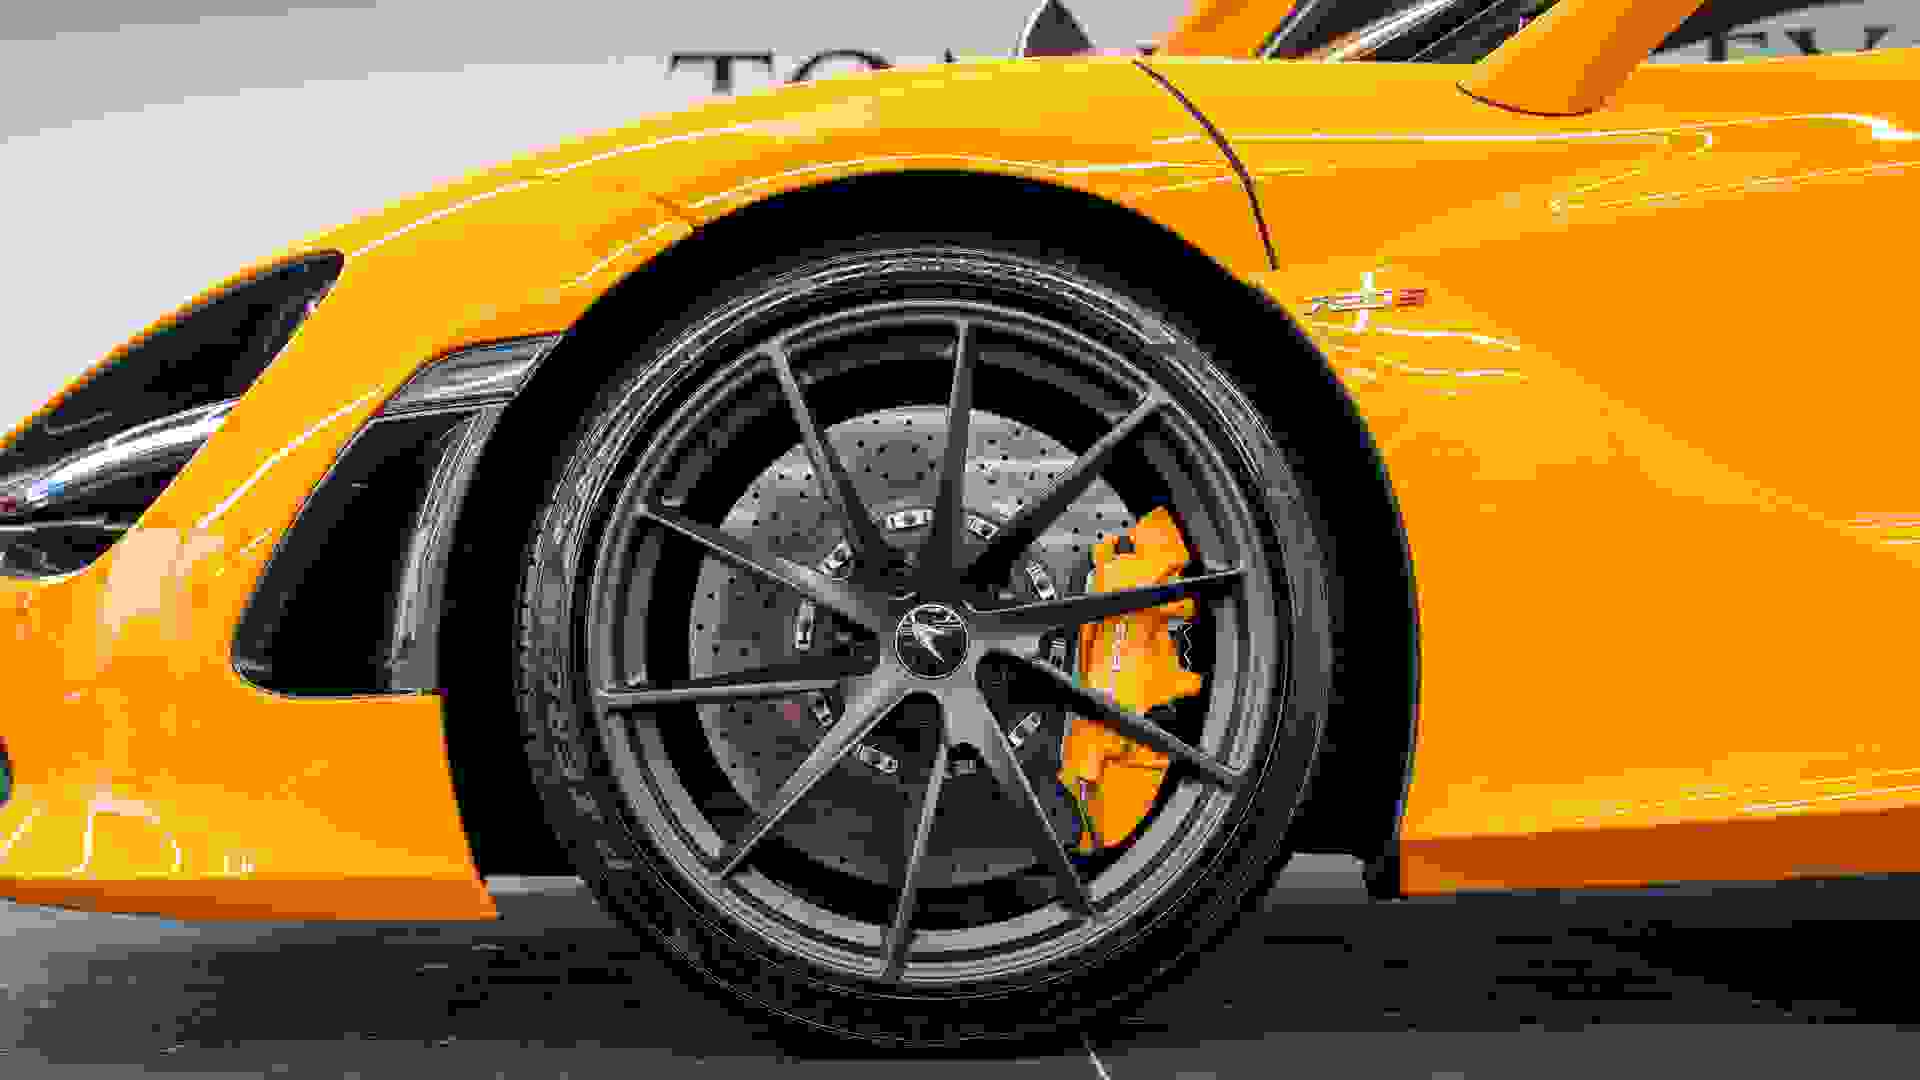 McLaren 720S Photo b1f02991-feeb-4142-8ac7-015a2bdb7437.jpg